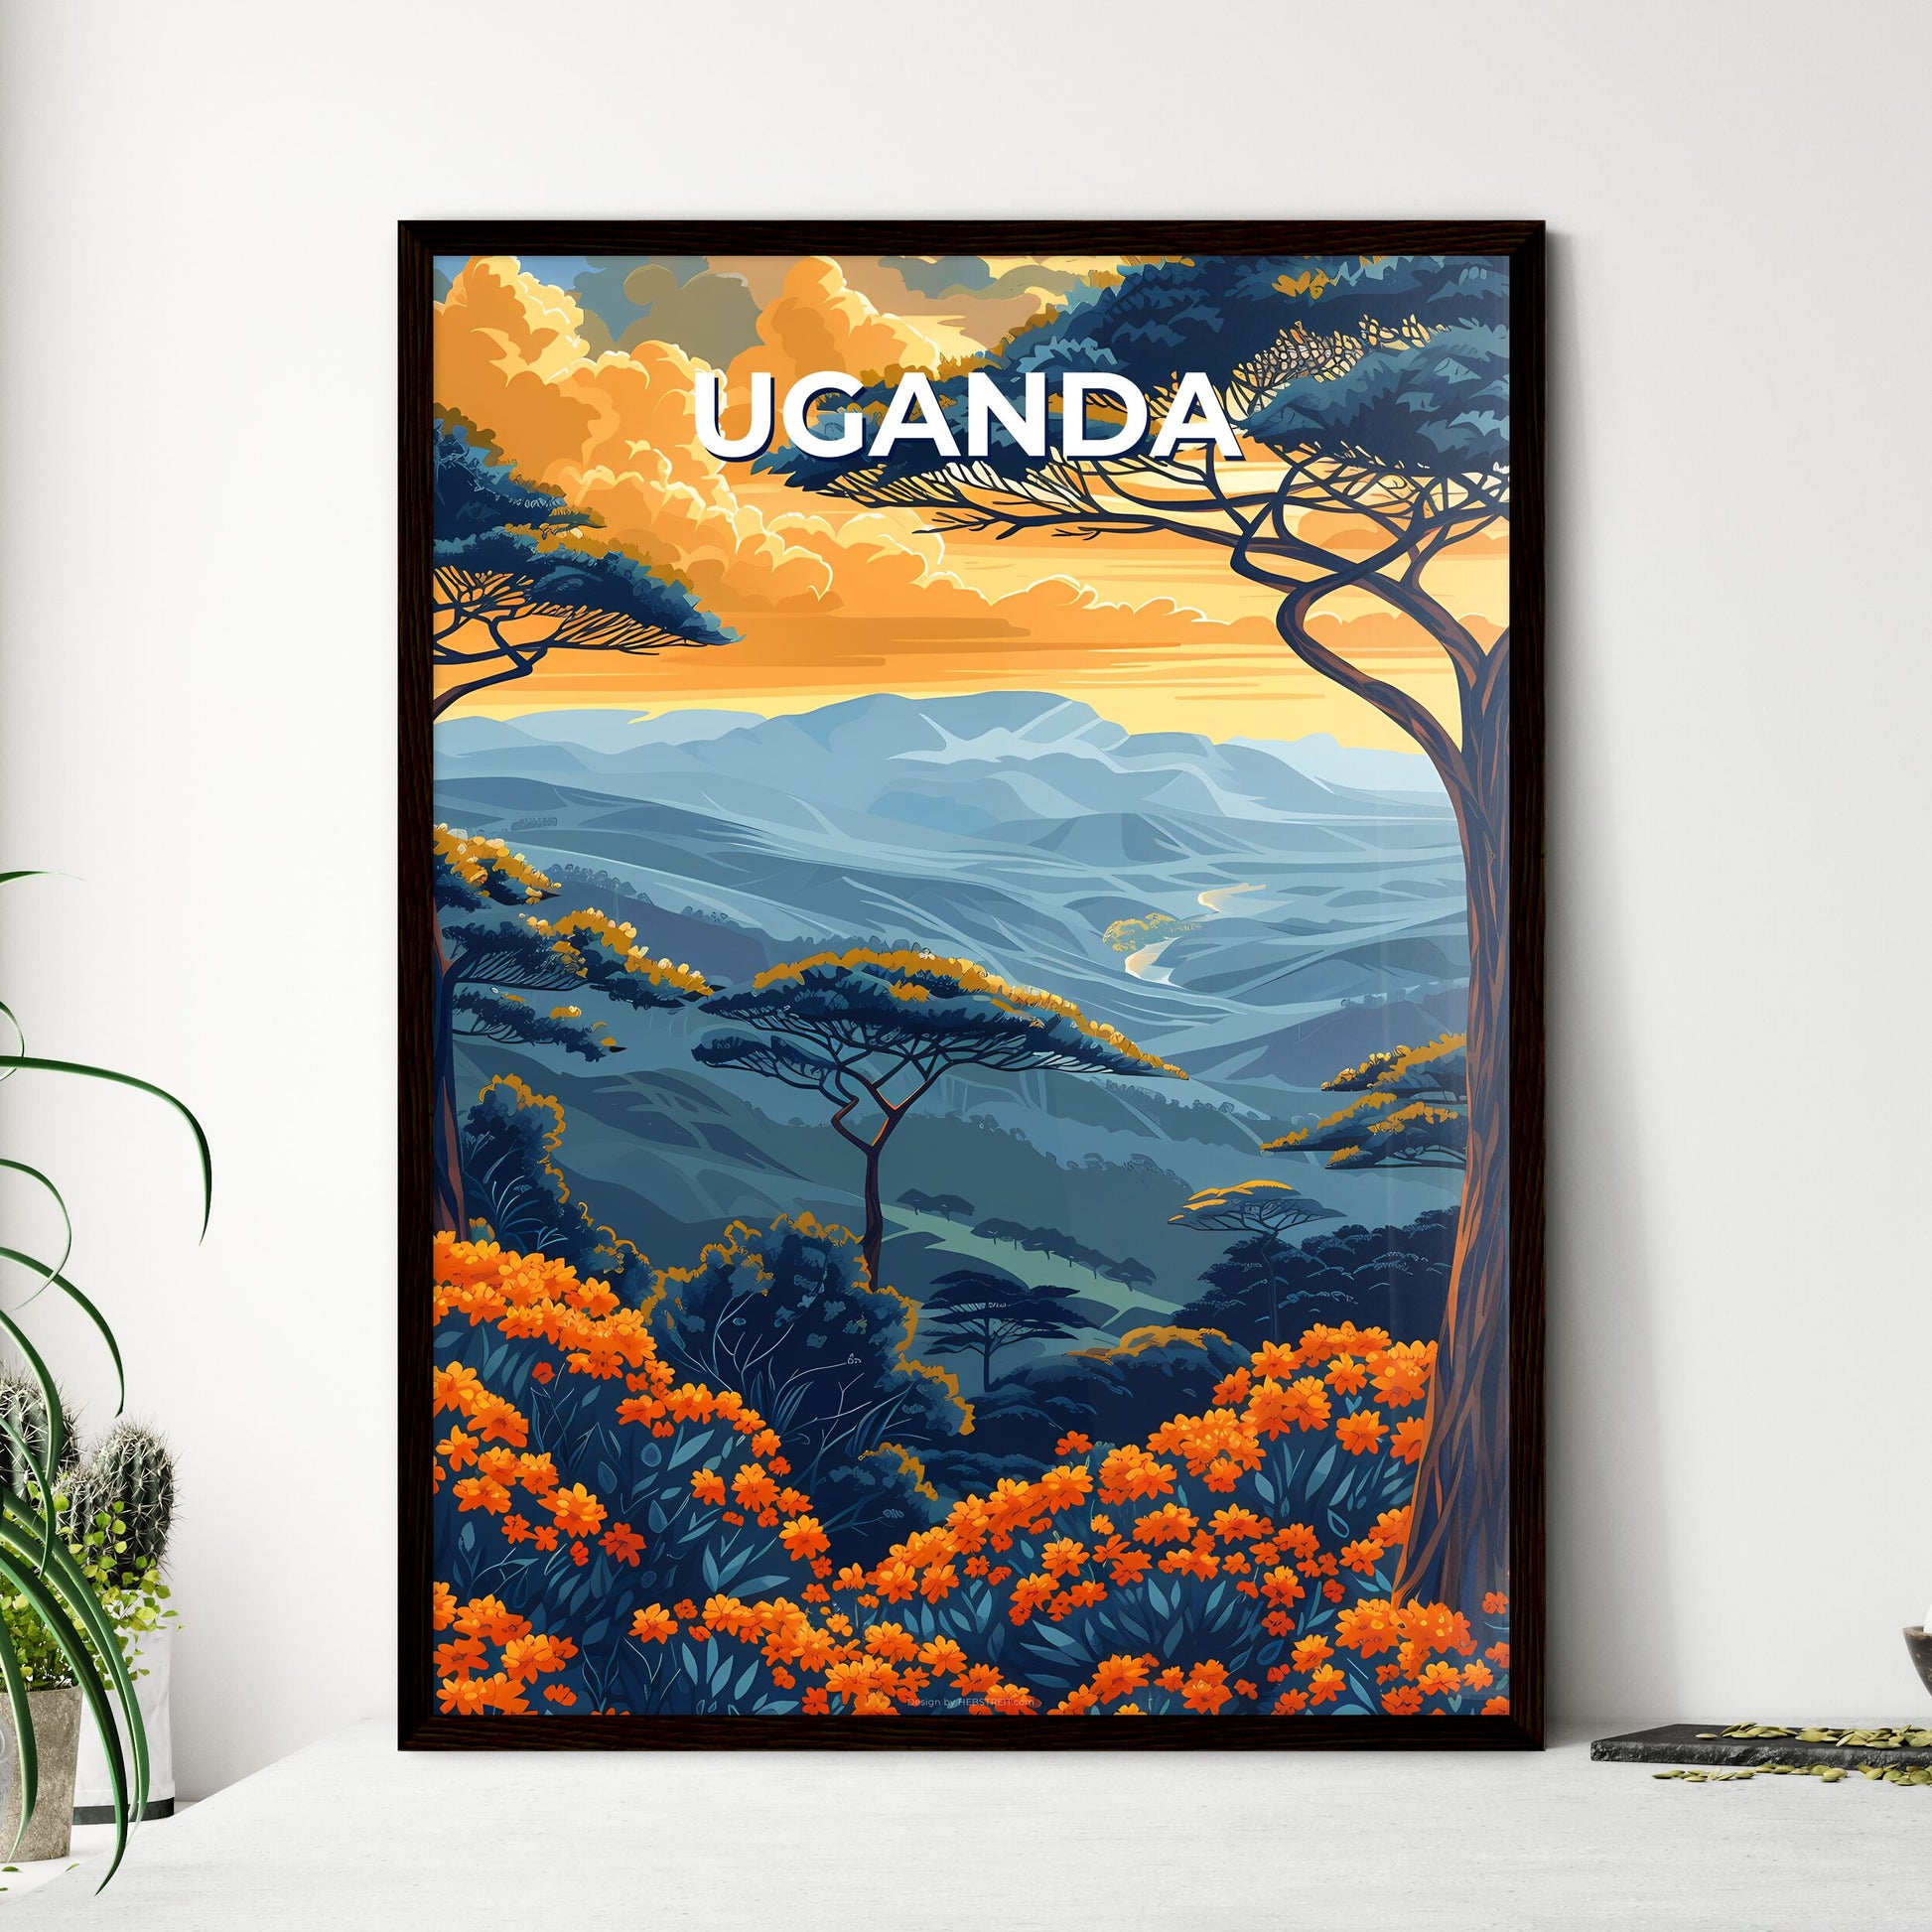 Uganda Africa Painting Landscape Art Vibrancy Trees Flowers